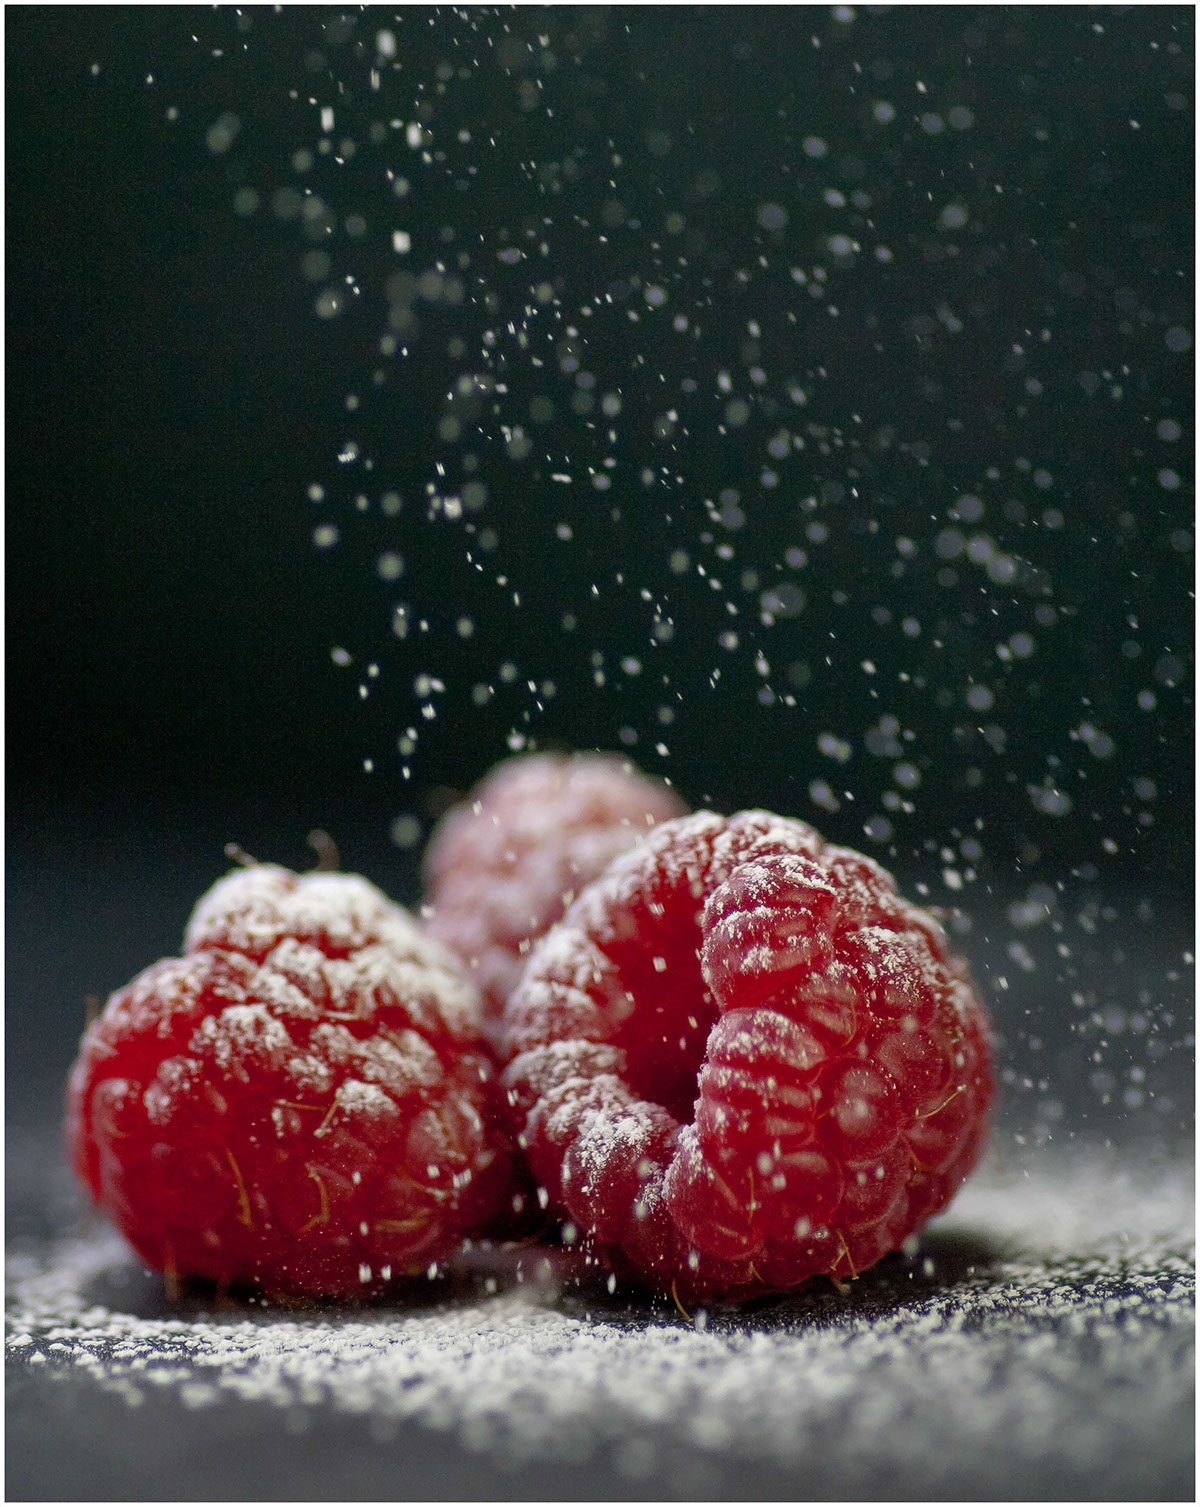 Food  pomegranate raspberry raspberries spoon icing sugar seeds